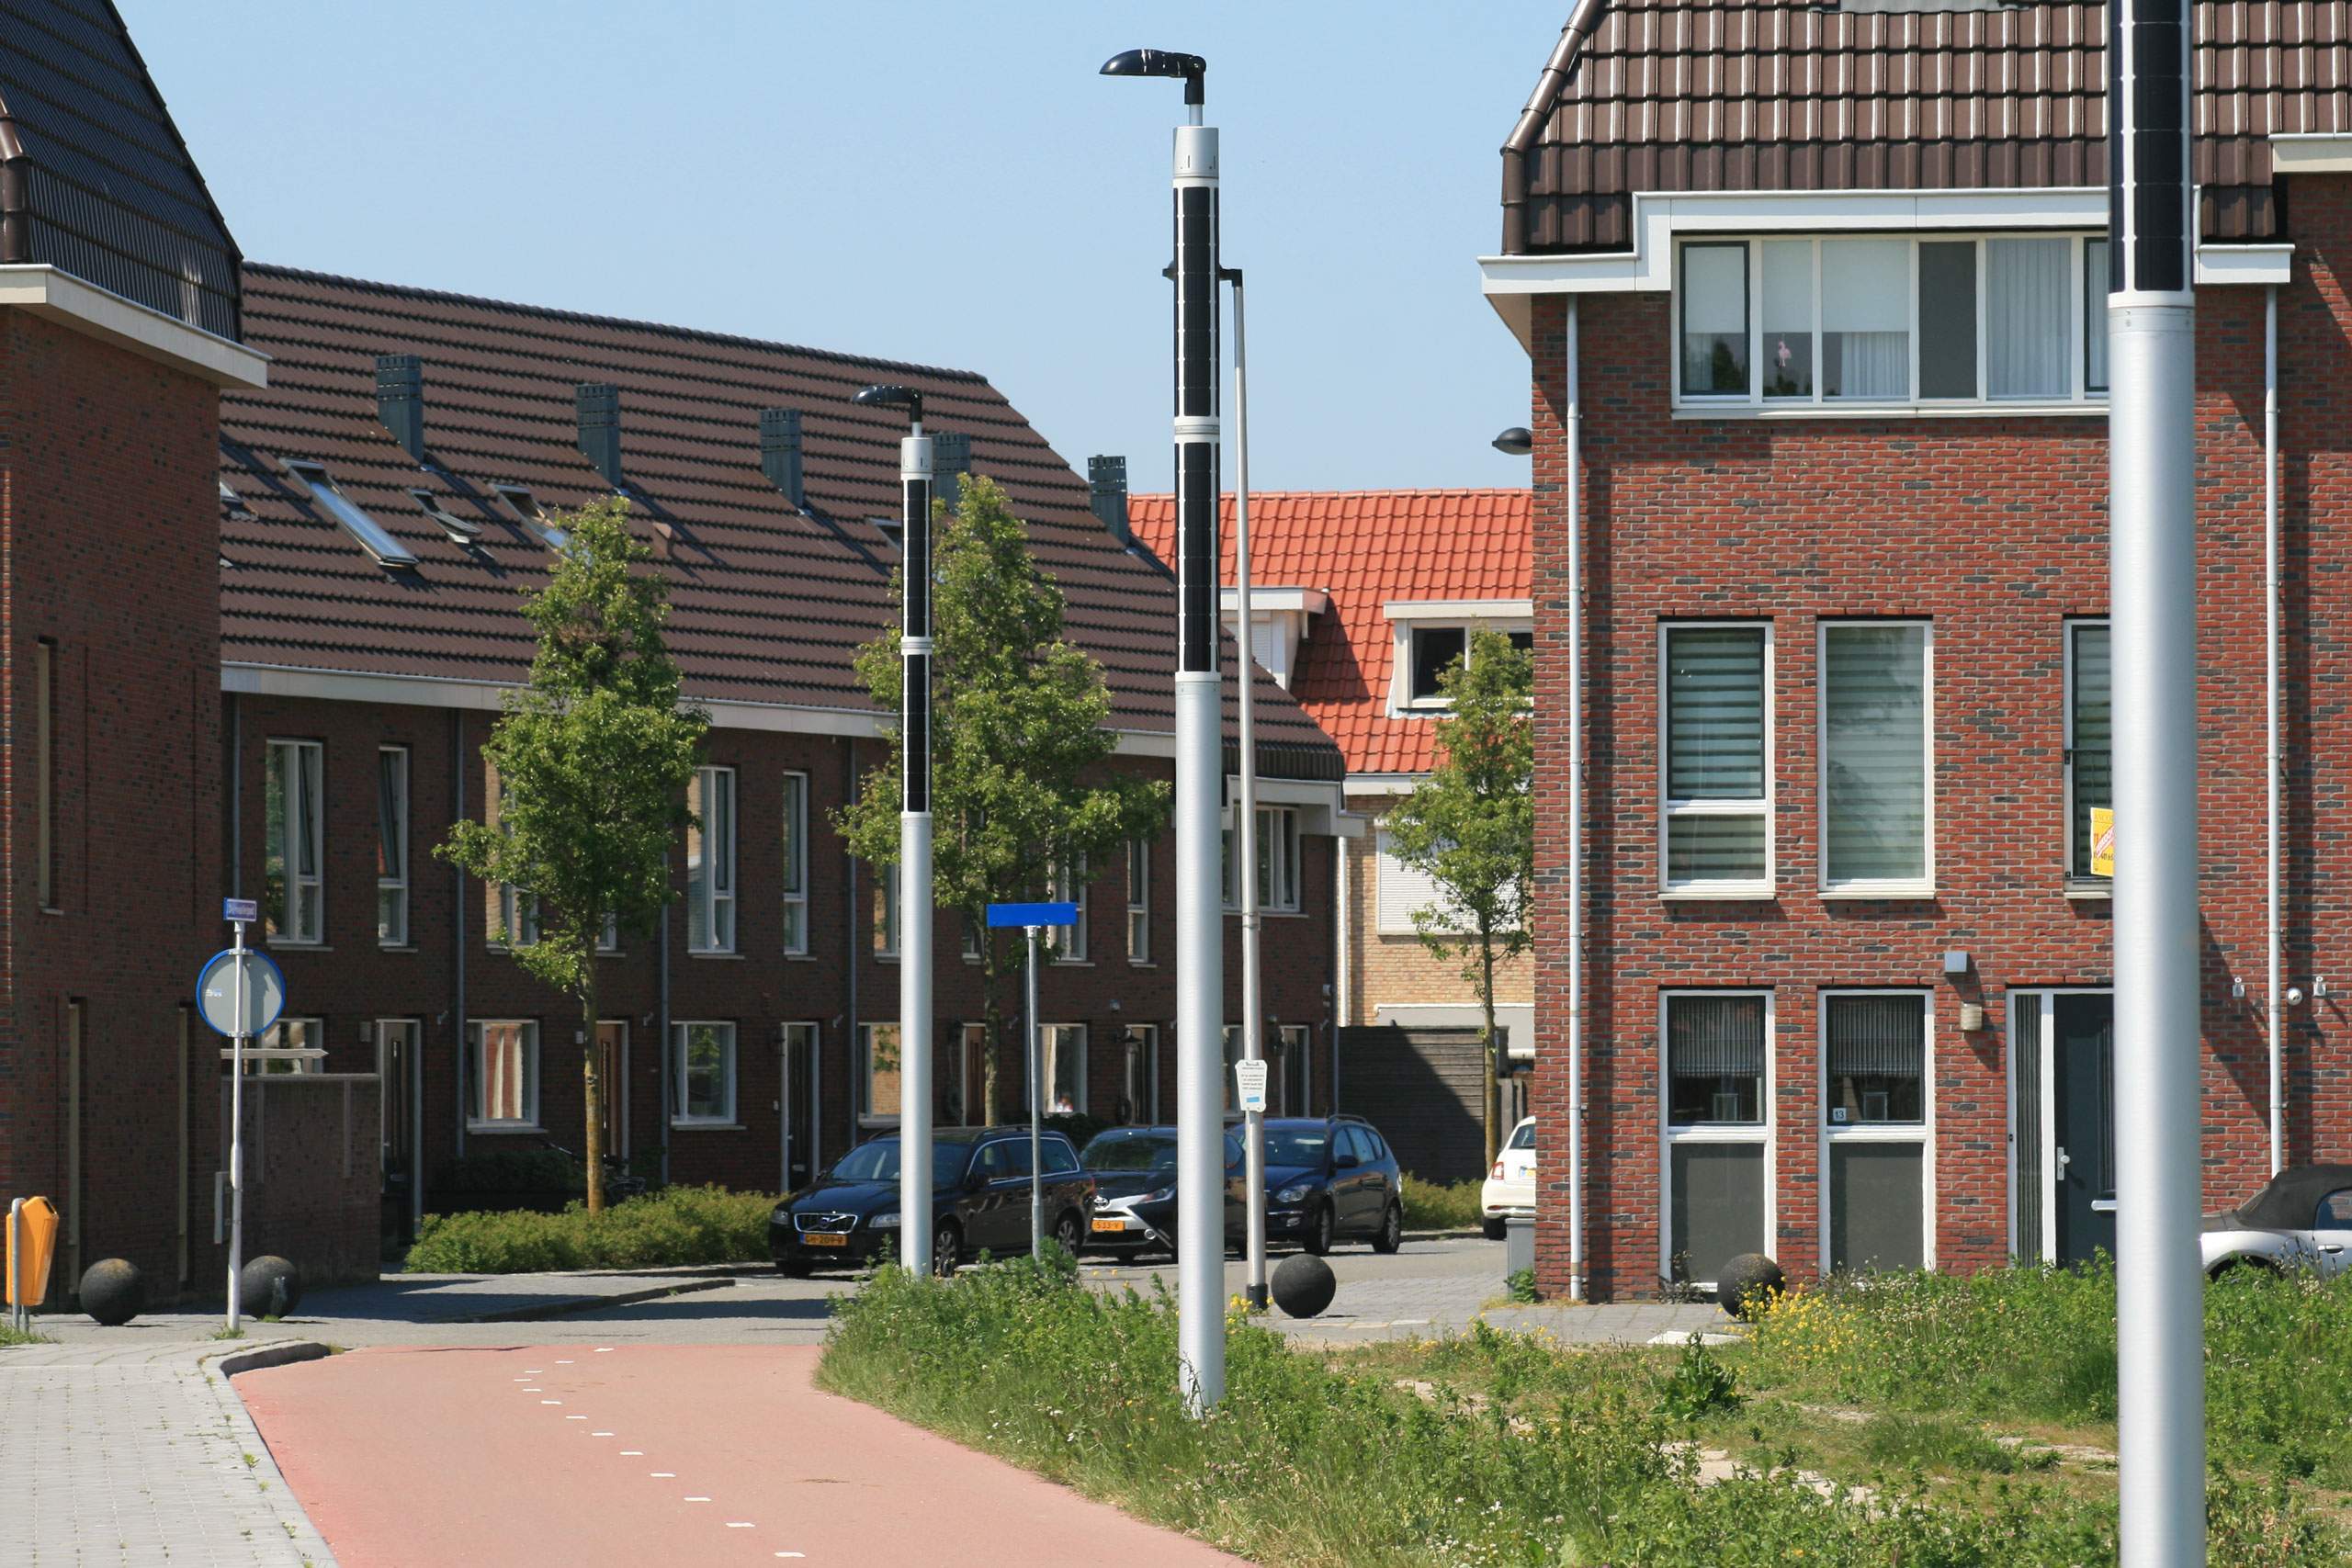 Eco friendly lighting at bike path in Dutch neighbourhood